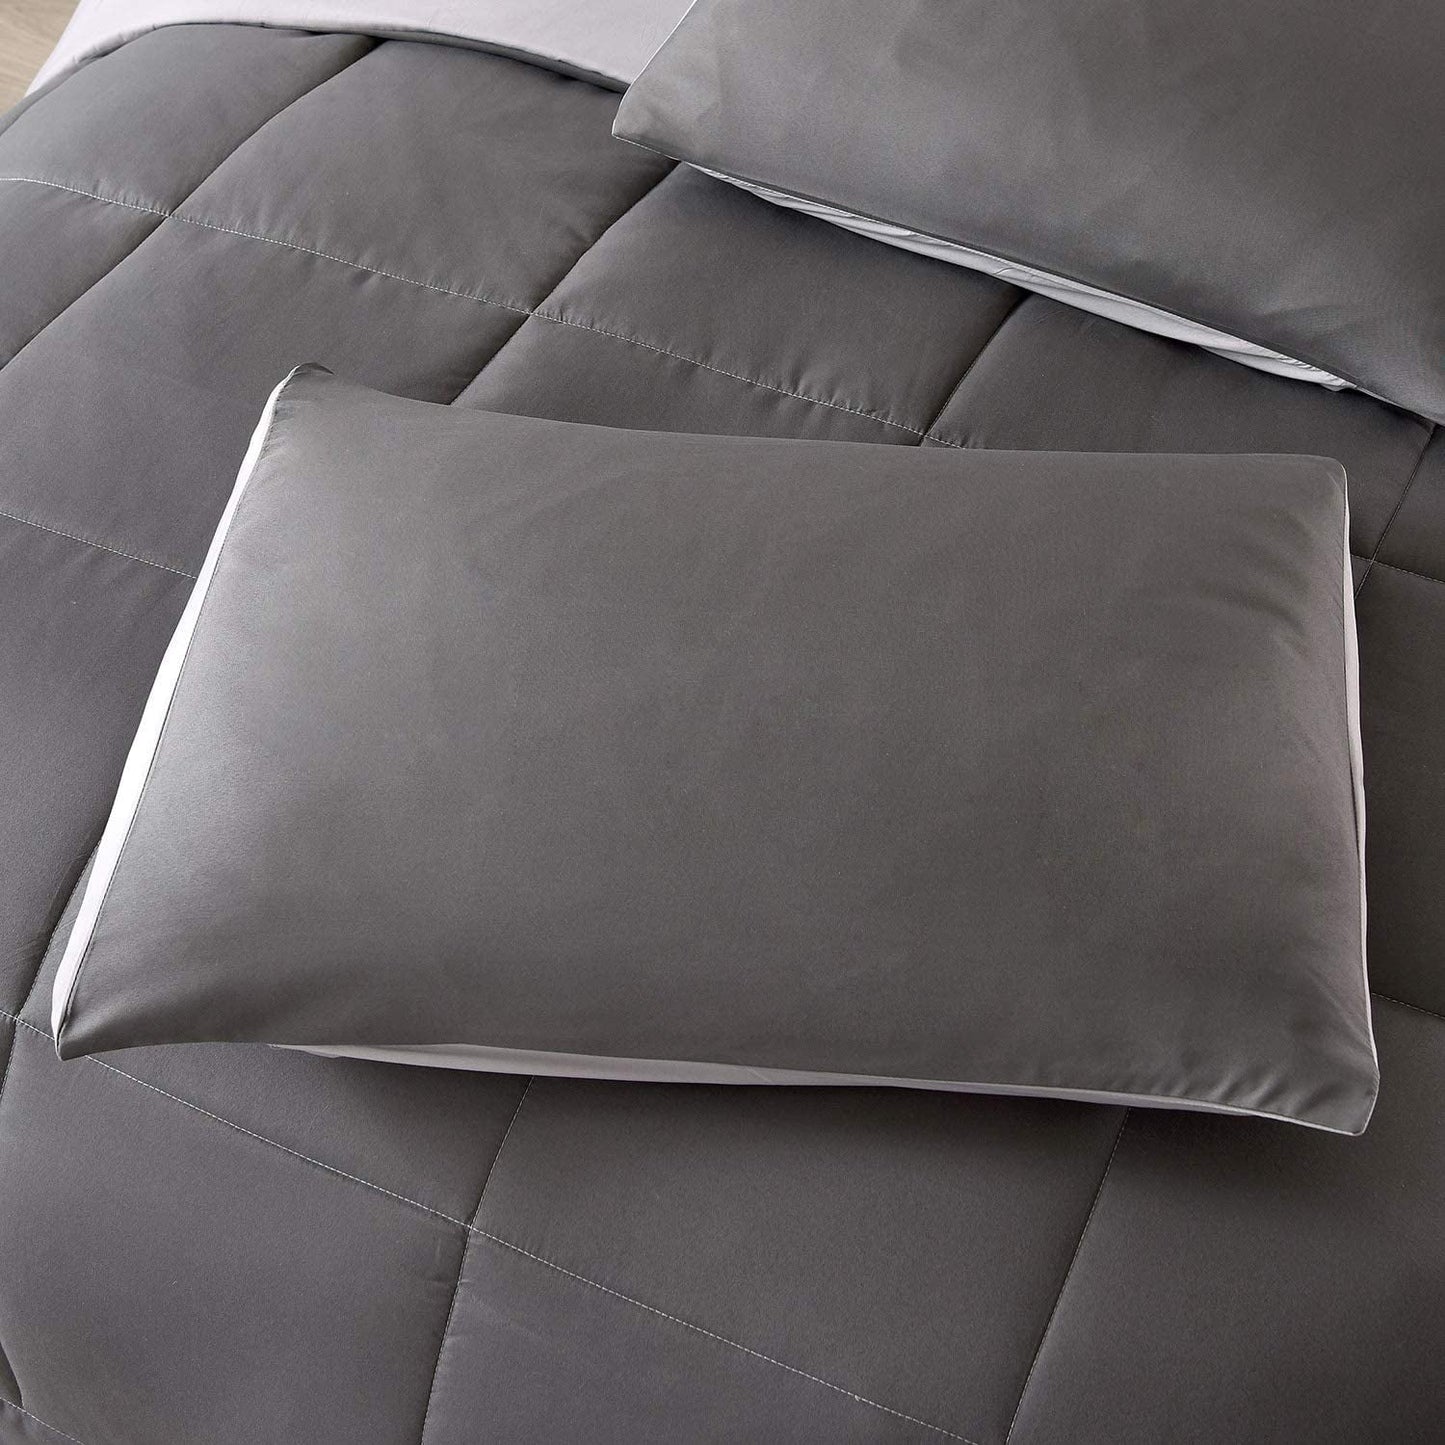 Exclusivo Mezcla Lightweight Reversible 3-Piece Comforter Set All Seasons, Down Alternative Comforter with 2 Pillow Shams, King Size, Grey